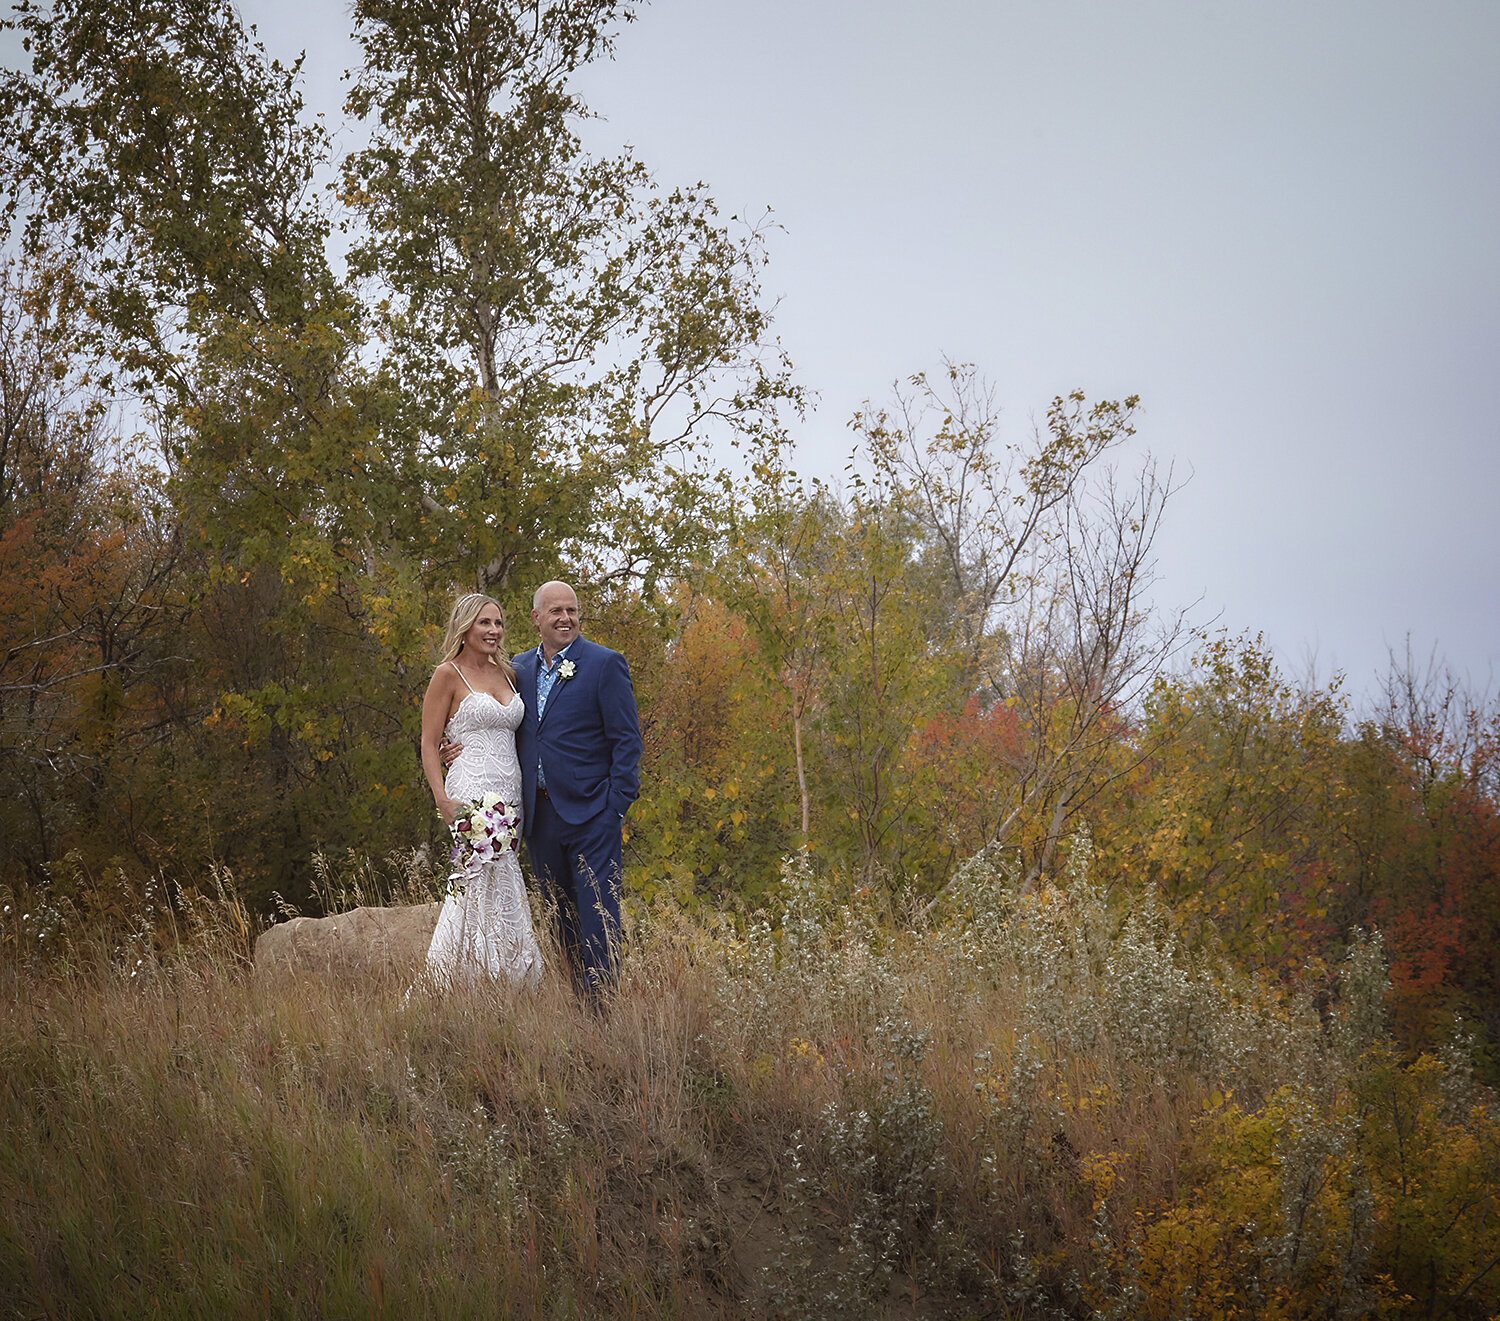 cindy-moleski-professional-wedding-couples-bride and groom-photographer-saskatoon-saskatchewan-29691-7761e.jpg